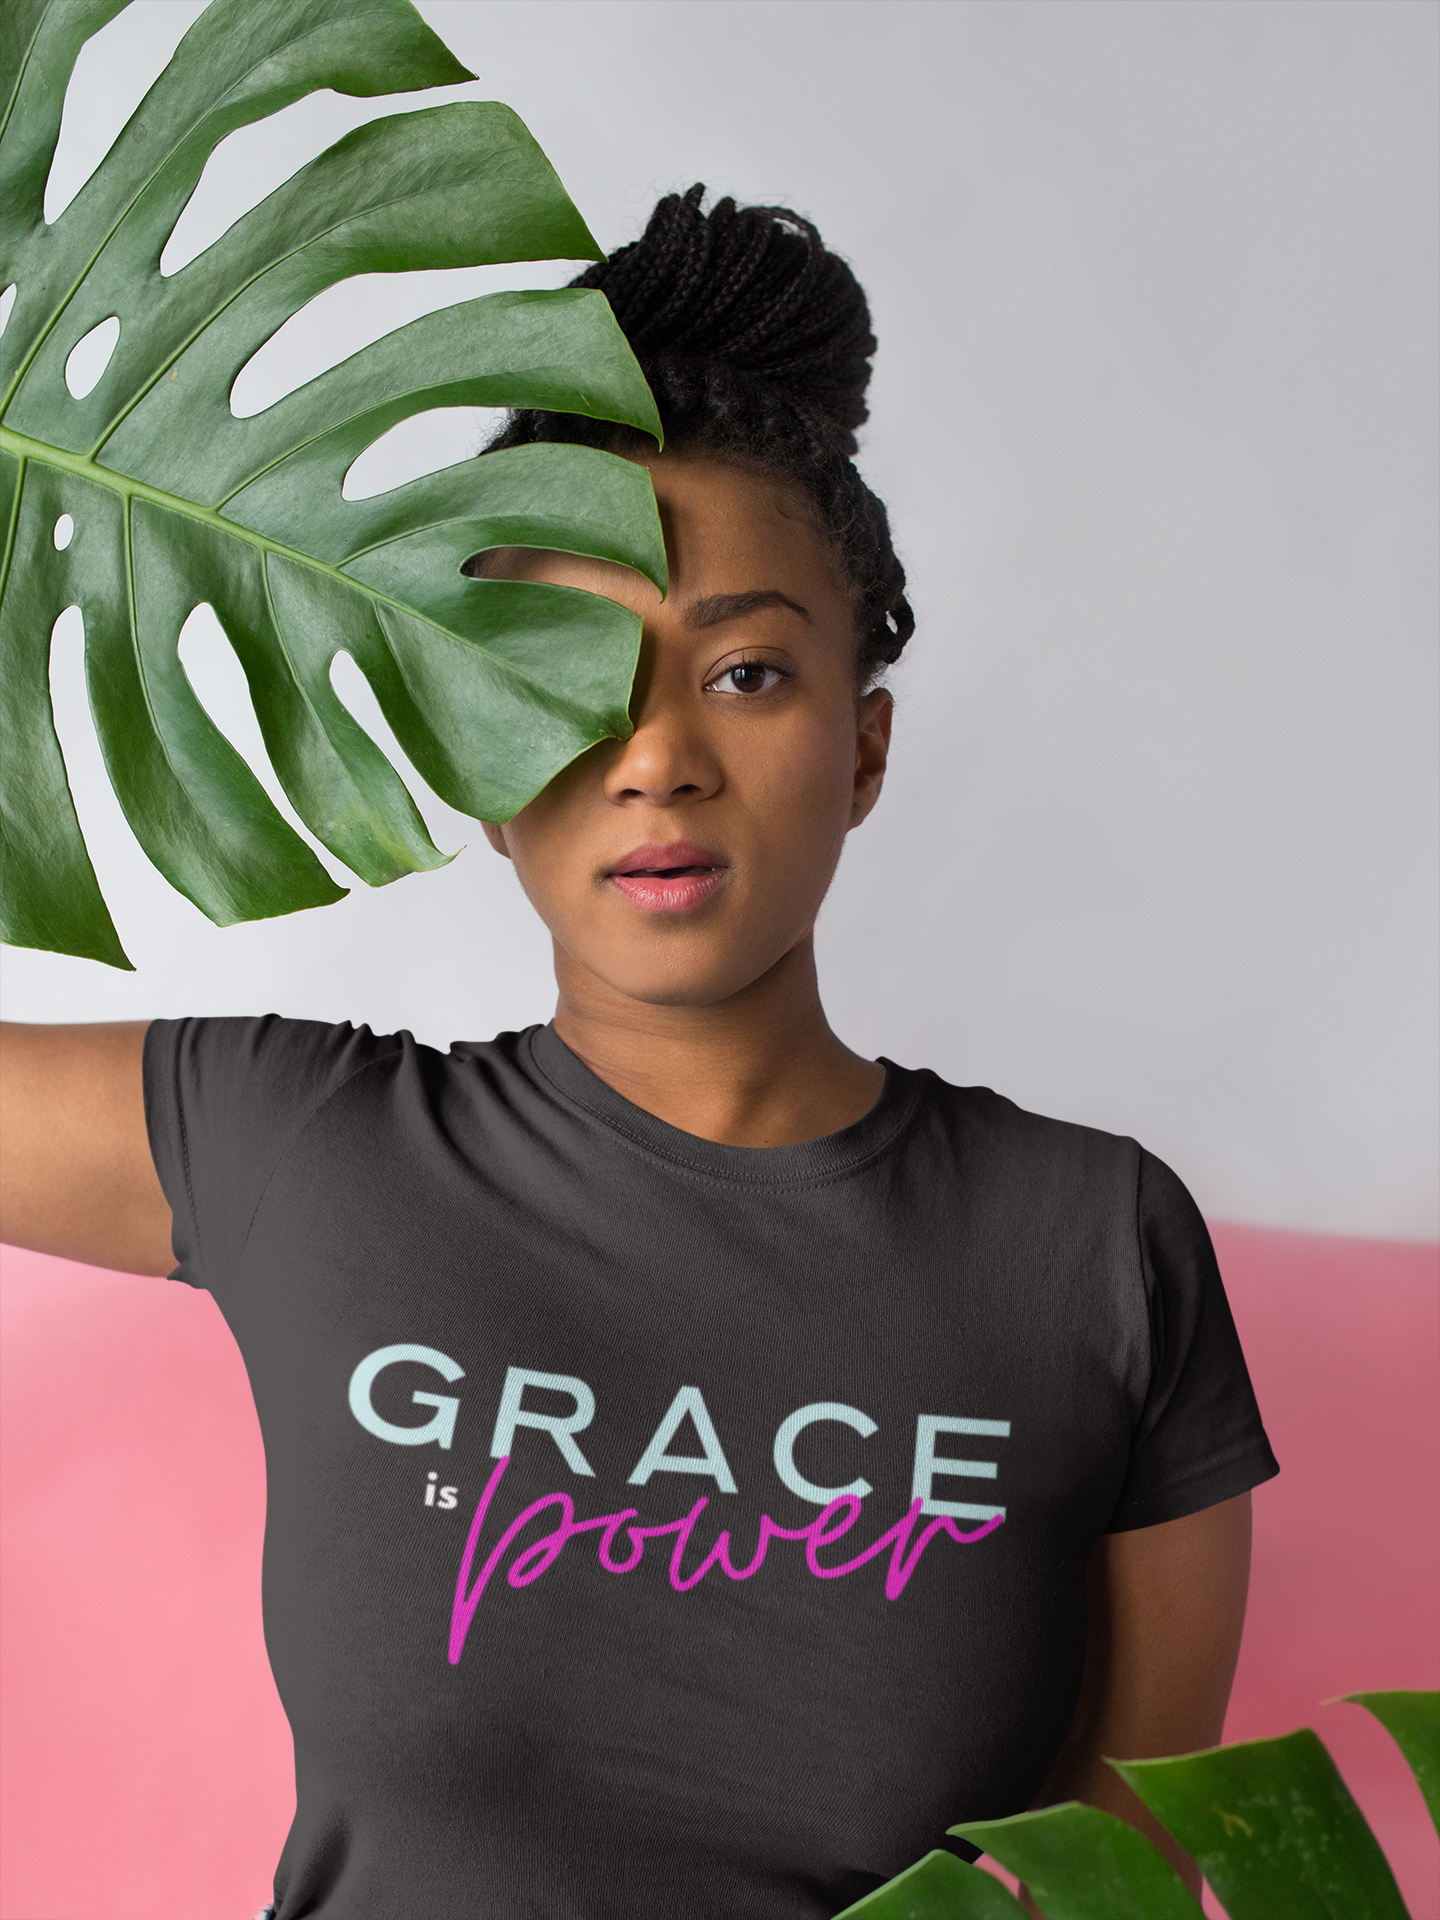 Grace is Power- Tshirt